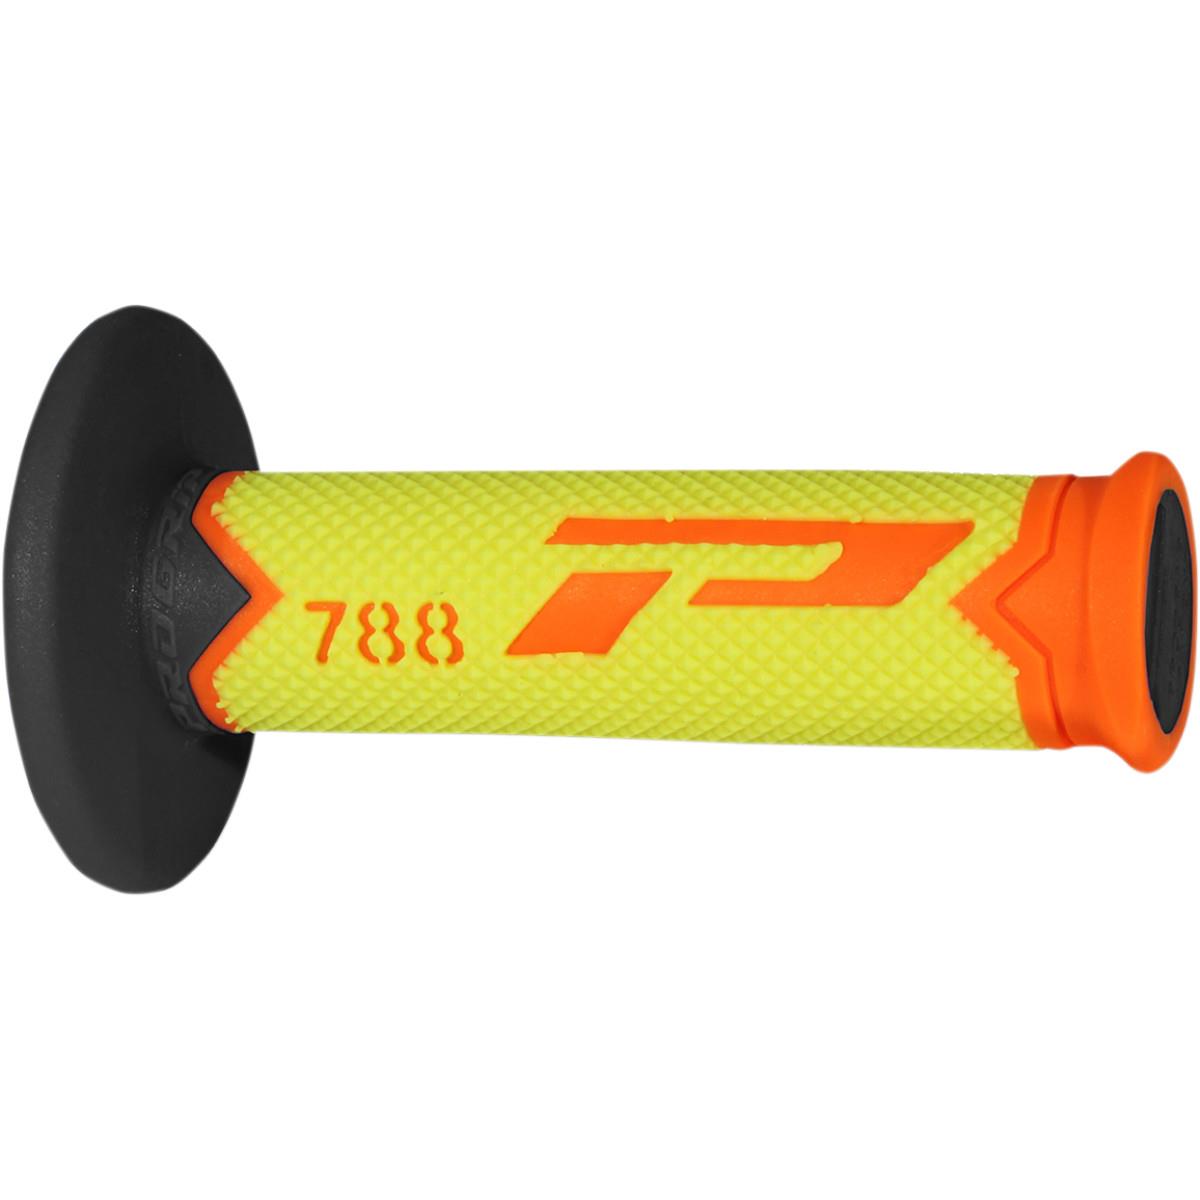 ProGrip Grips 788 Fluo Orange/Fluo Yellow/Black